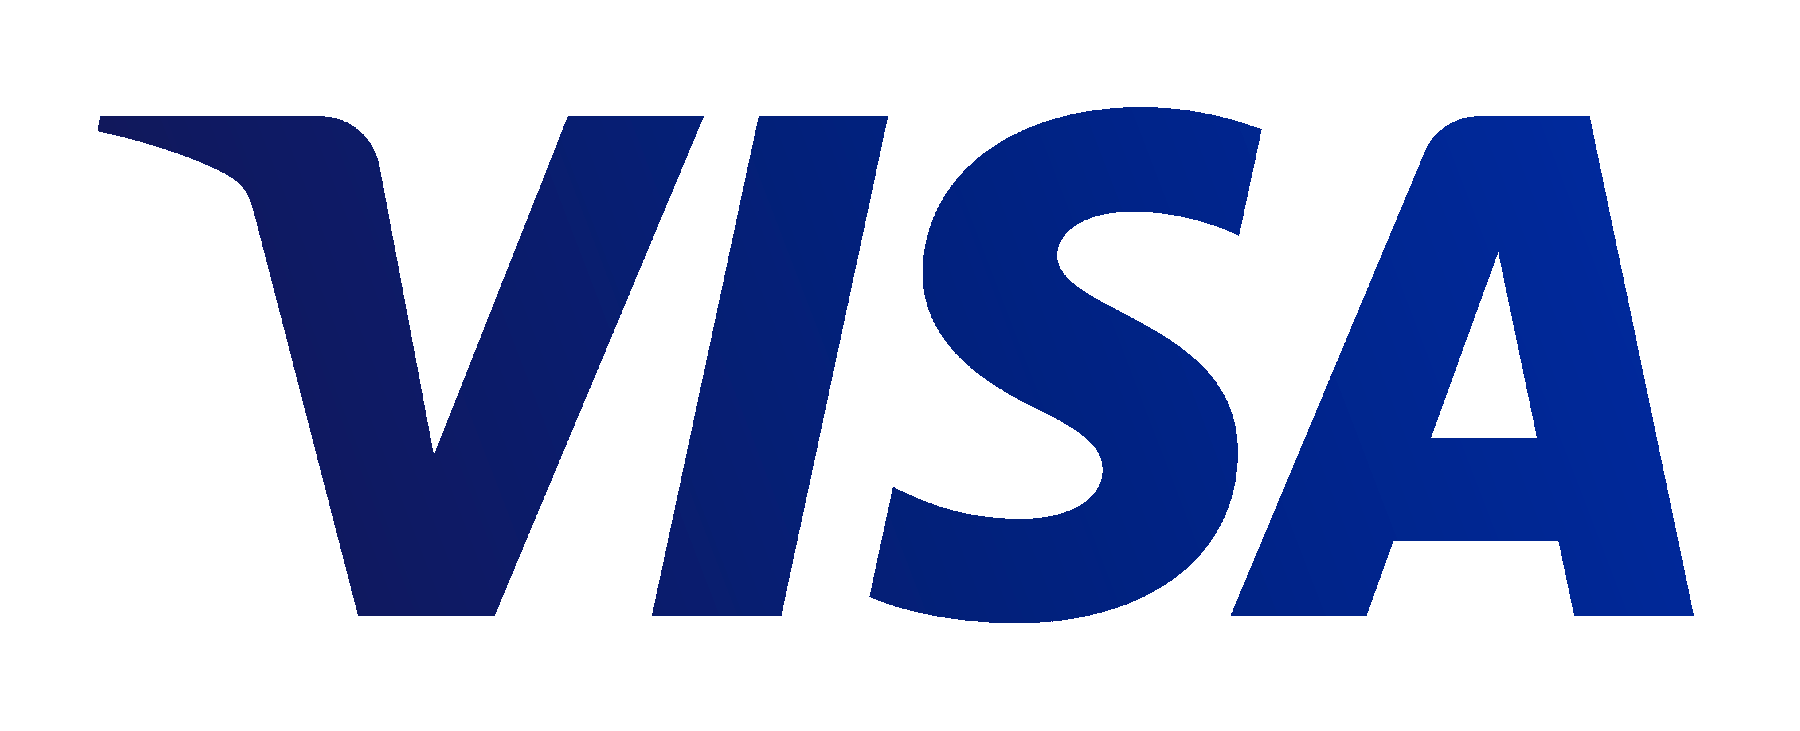 Visa Logo PNG - 177375